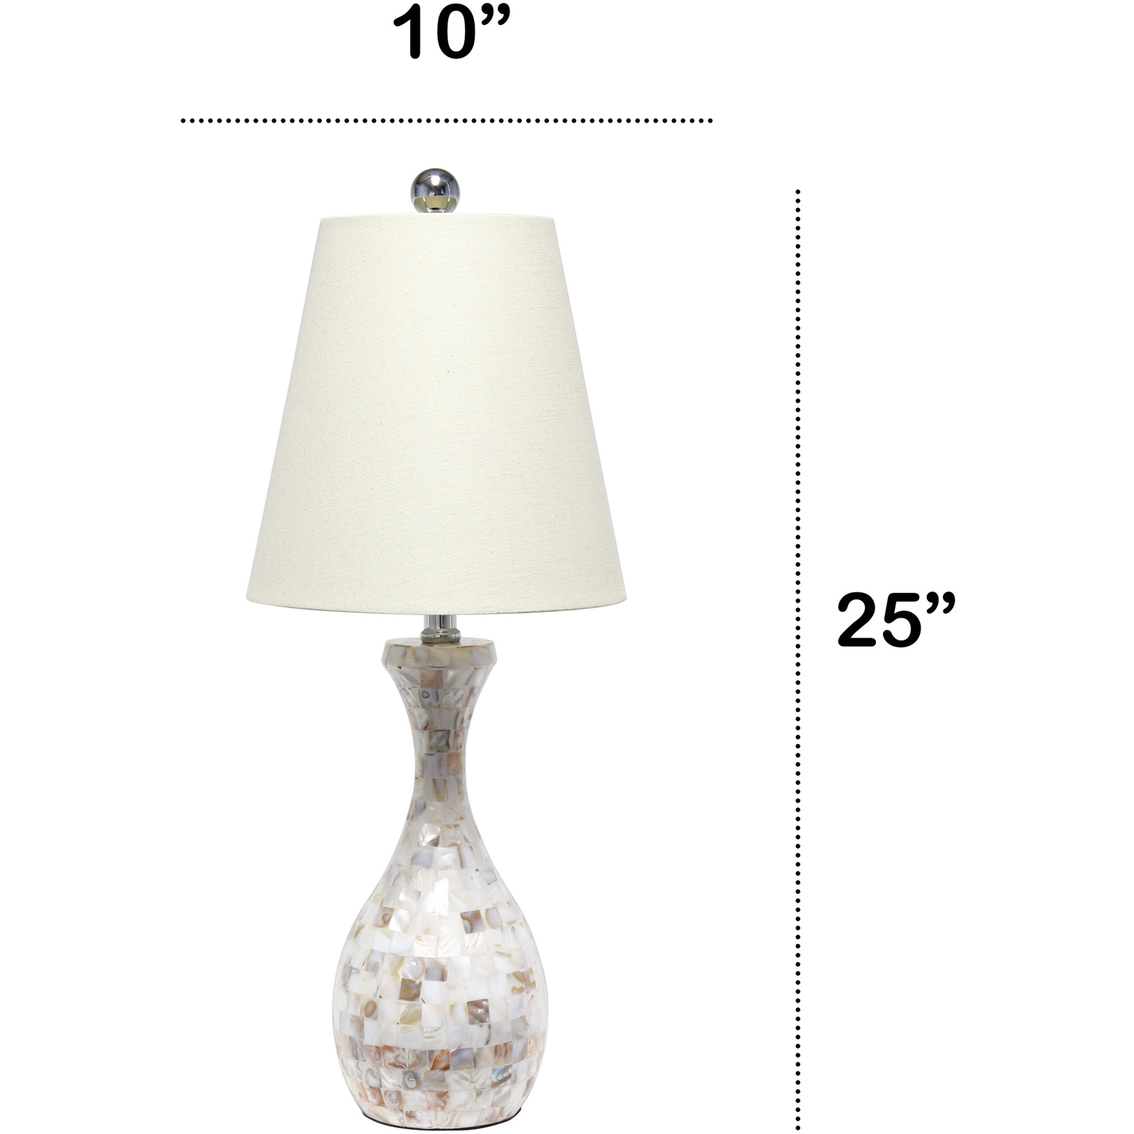 Lalia Home Malibu Curved Mosaic Seashell Table Lamp - Image 7 of 7